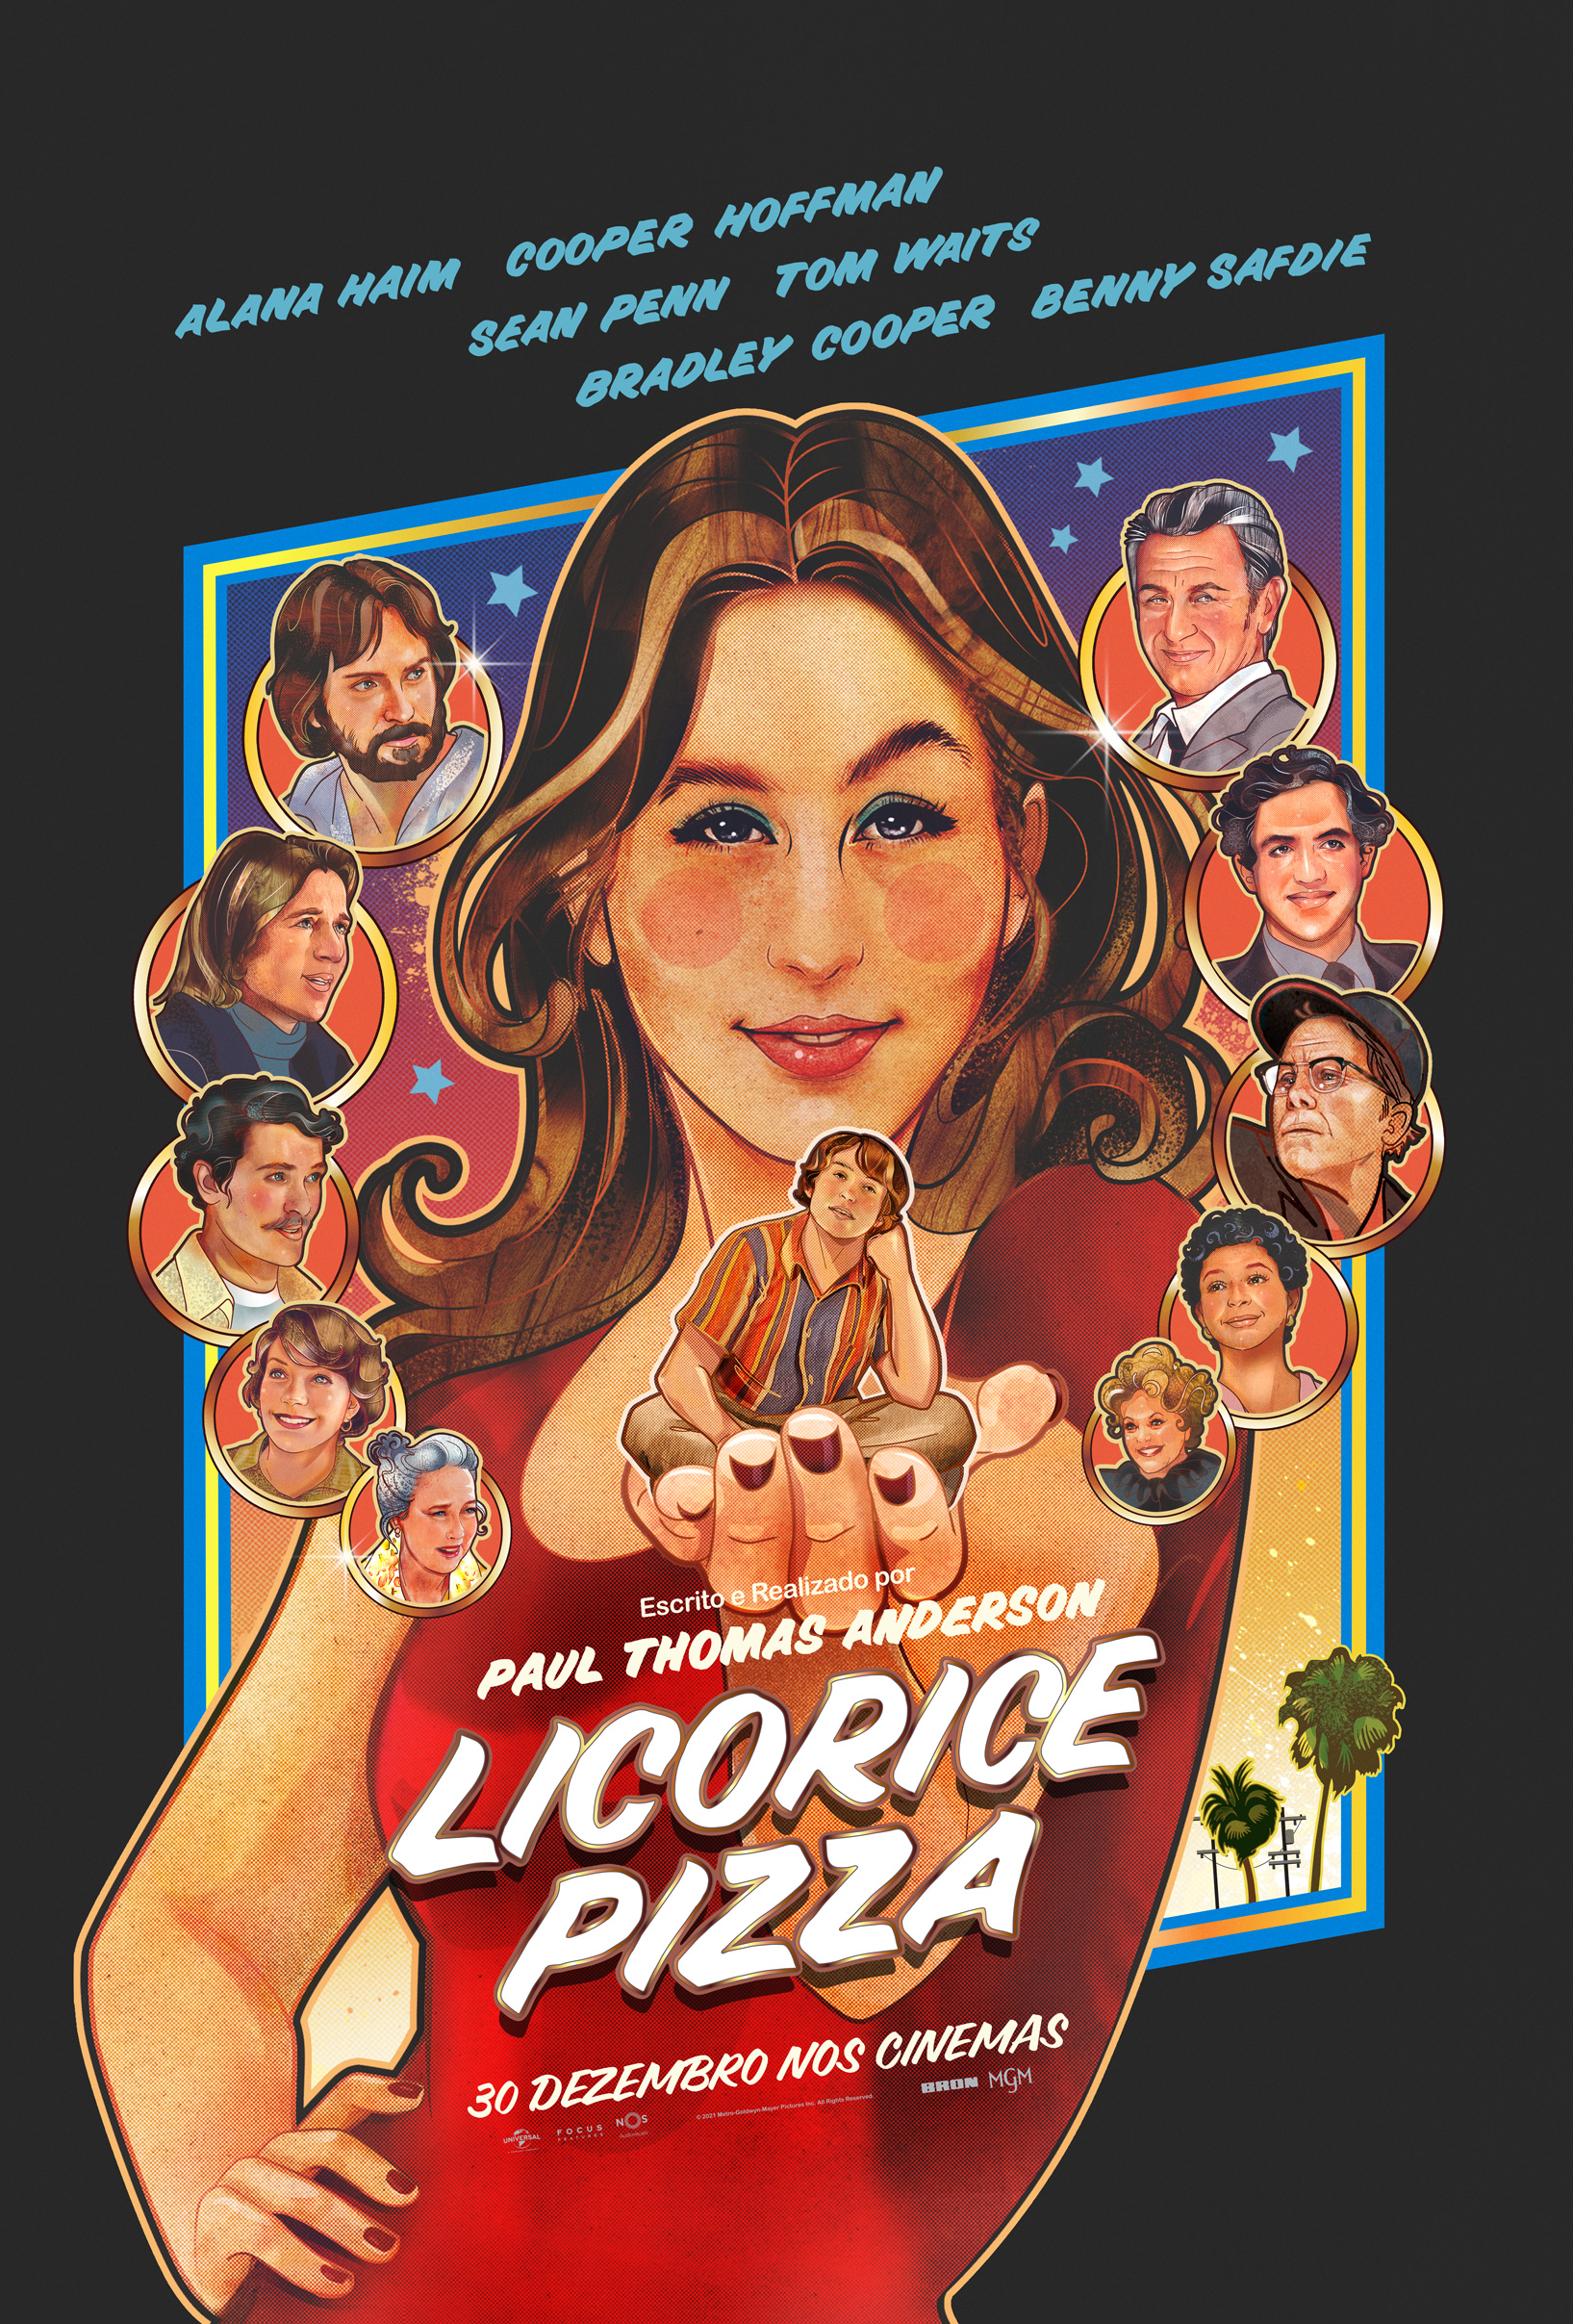 Cartaz de cinema do filme Licorice Pizza